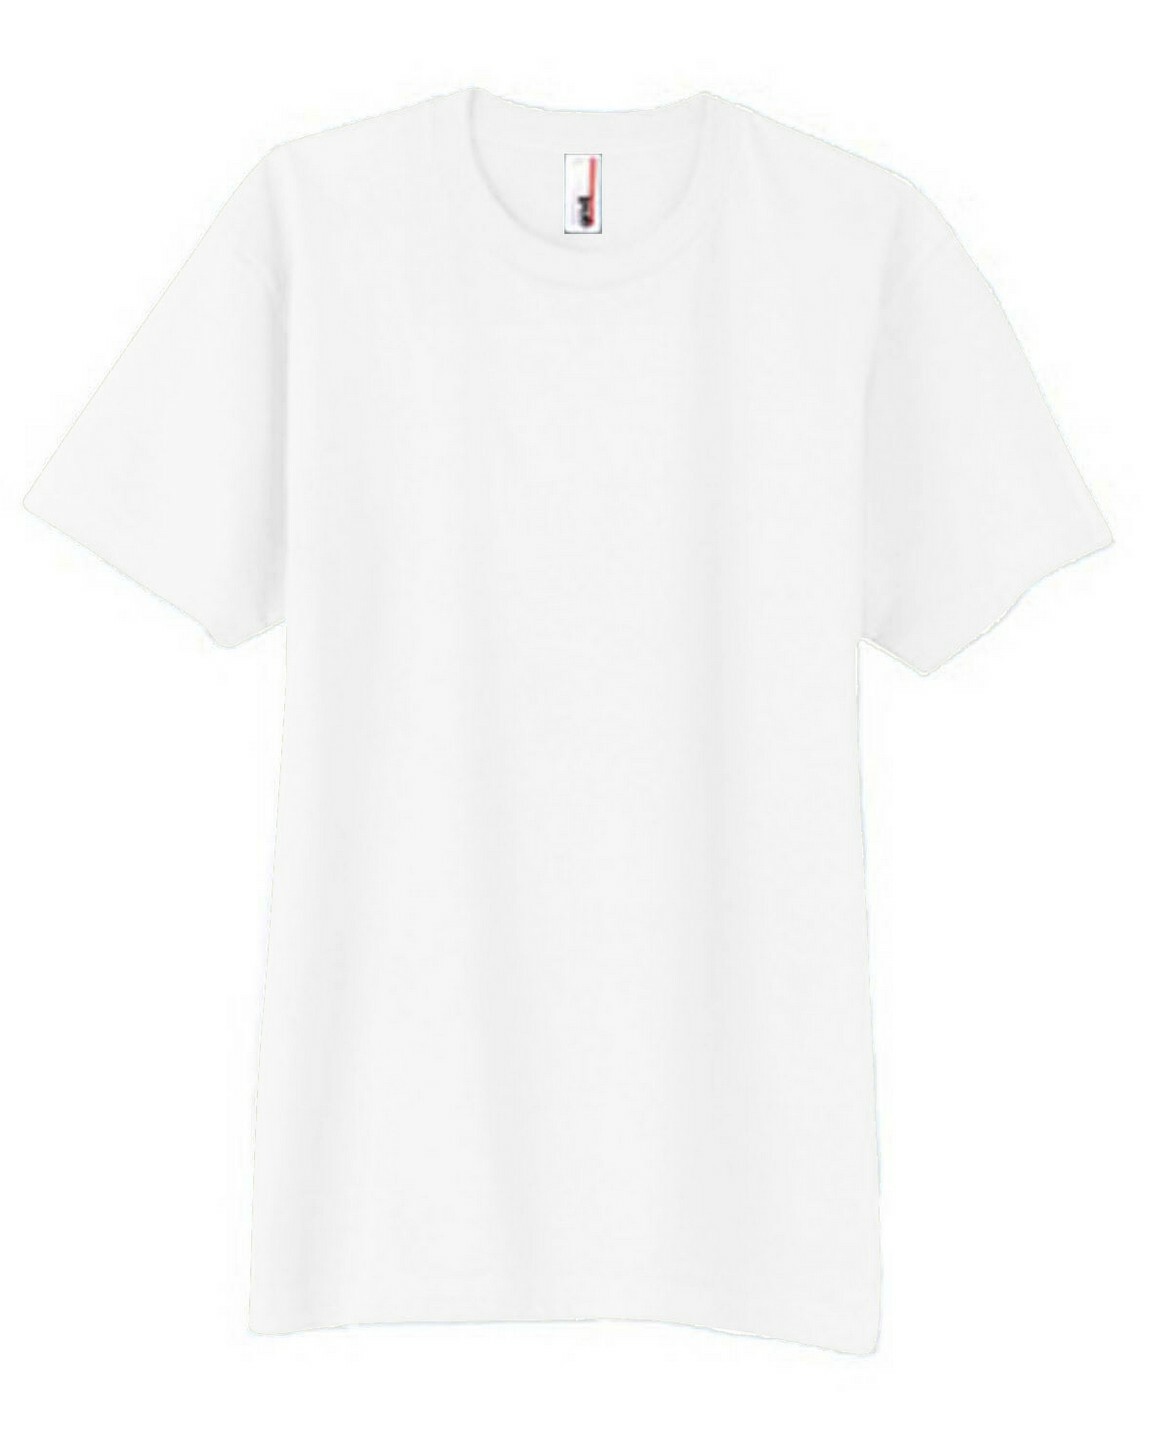 Anvil 980 Lightweight T-Shirt | Blank T-Shirts